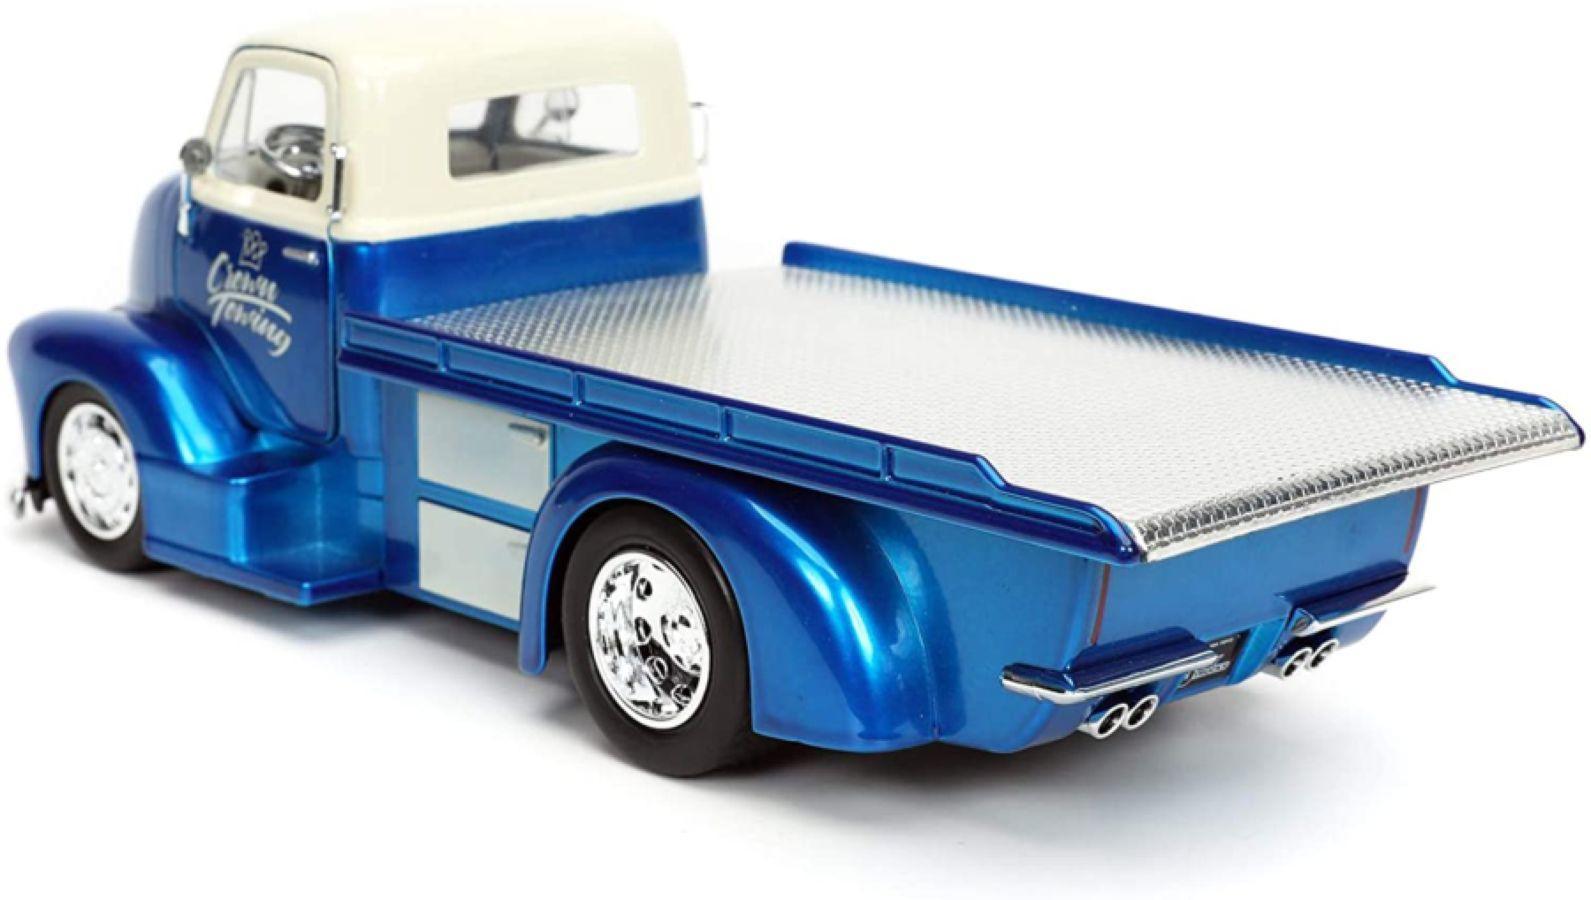 JAD32708 Just Trucks - 1952 Chevy COE Flatbed 1:24 Scale - Jada Toys - Titan Pop Culture